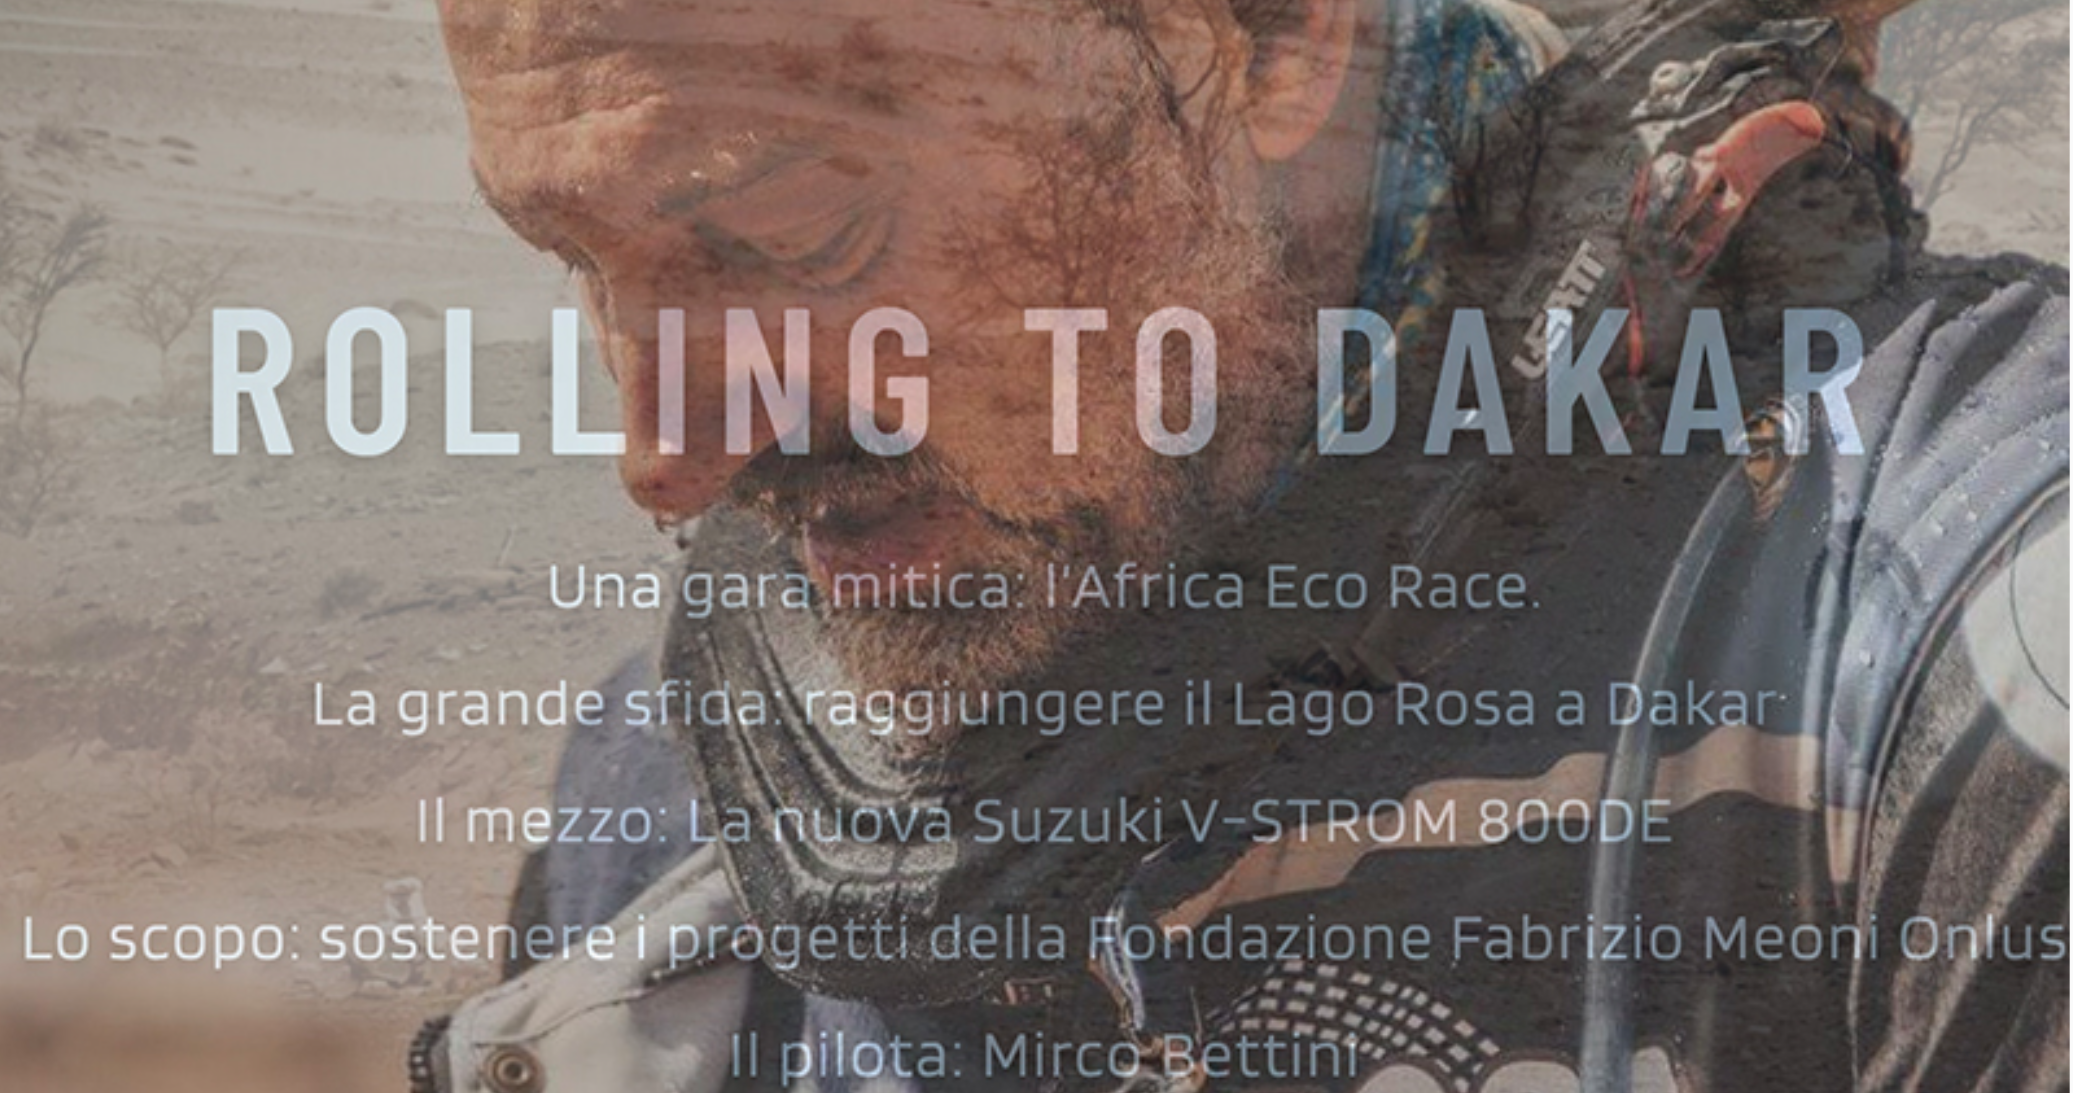 Rolling To Dakar = Africa Eco Race